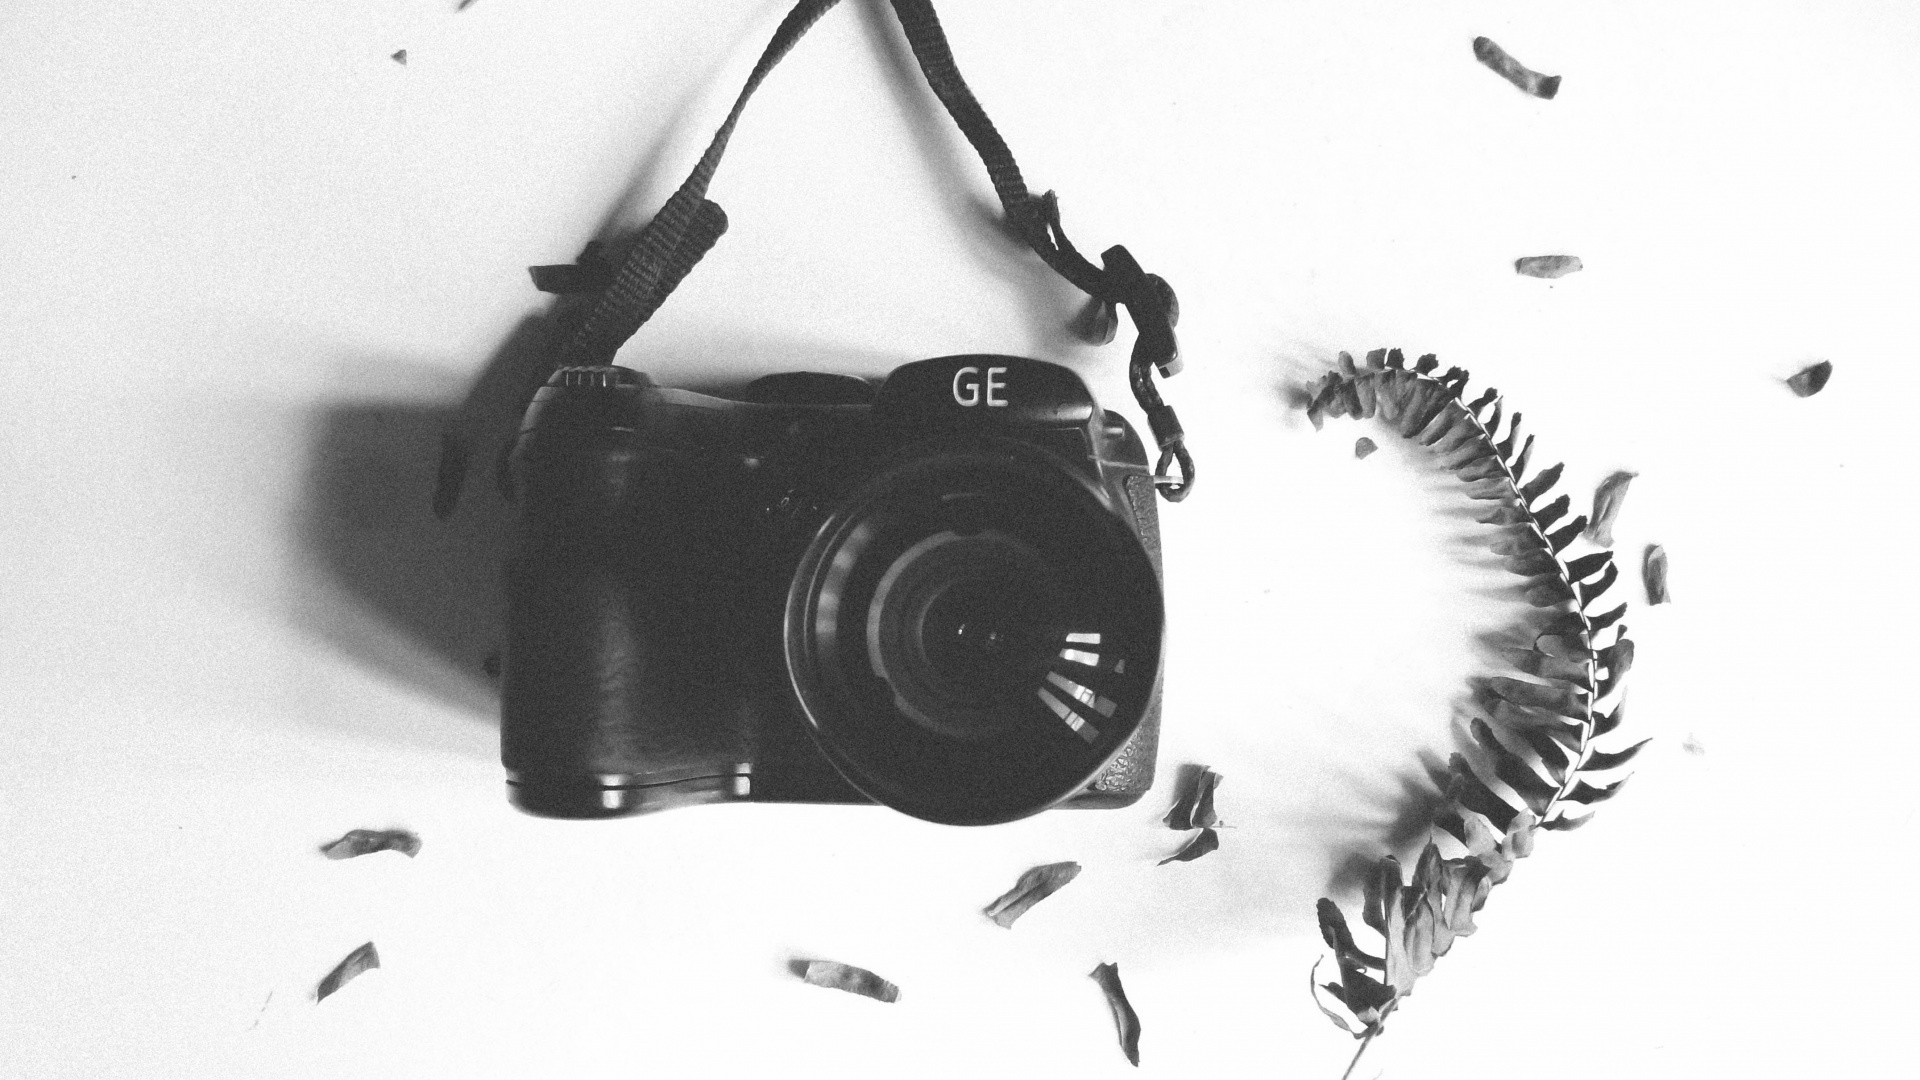 Black Nikon Dslr Camera on White Textile. Wallpaper in 1920x1080 Resolution